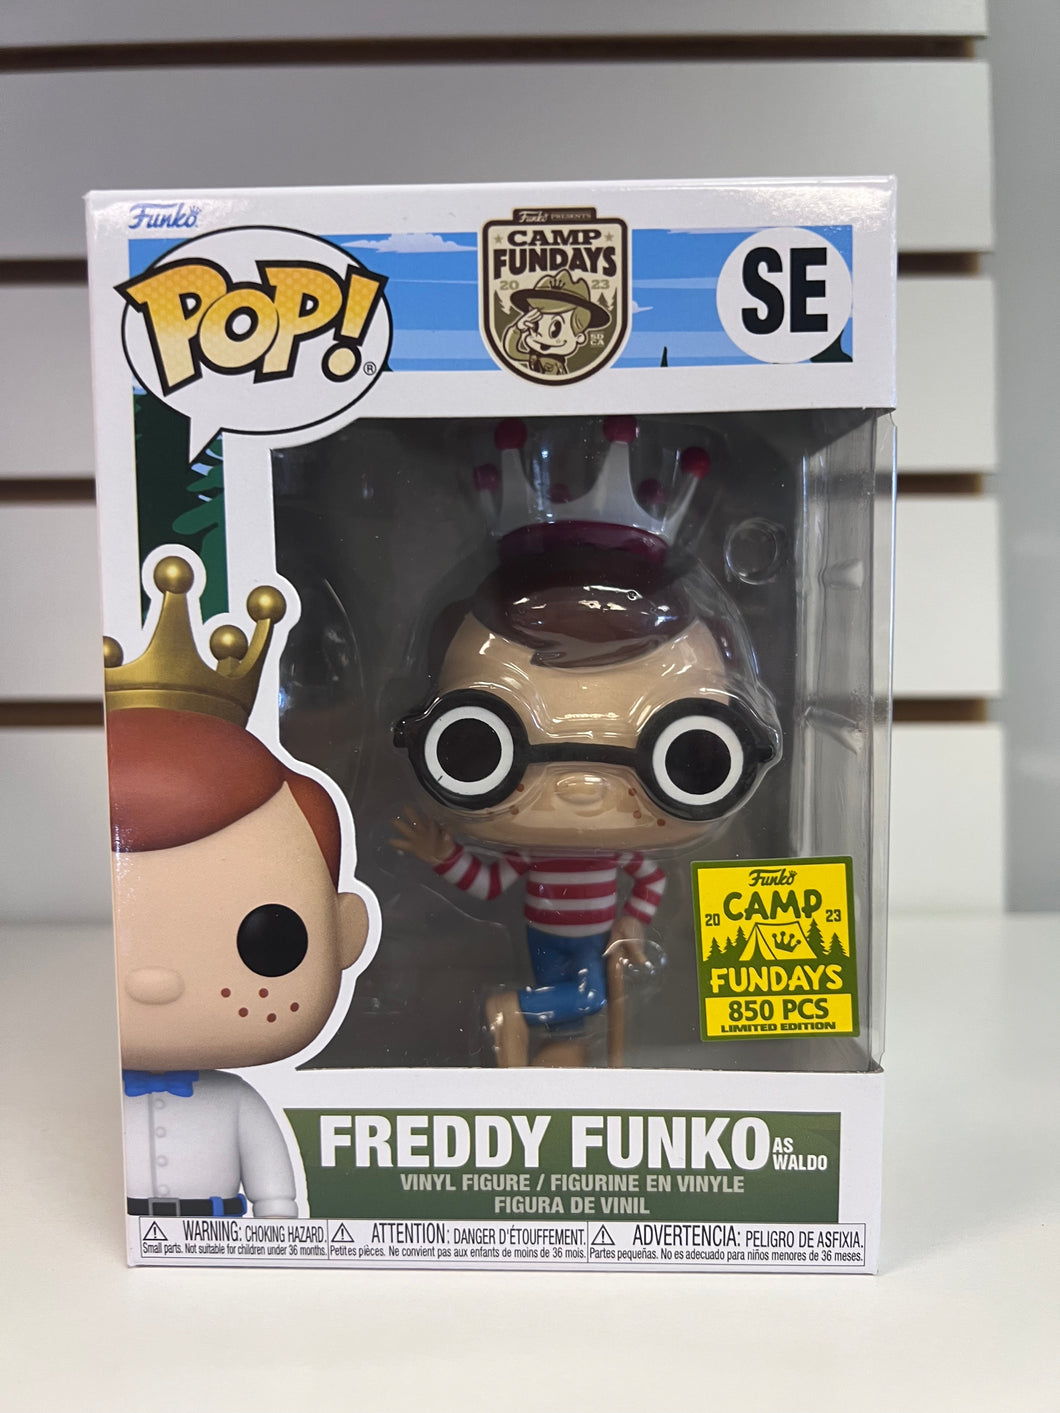 Funko Pop Freddy Funko as Waldo